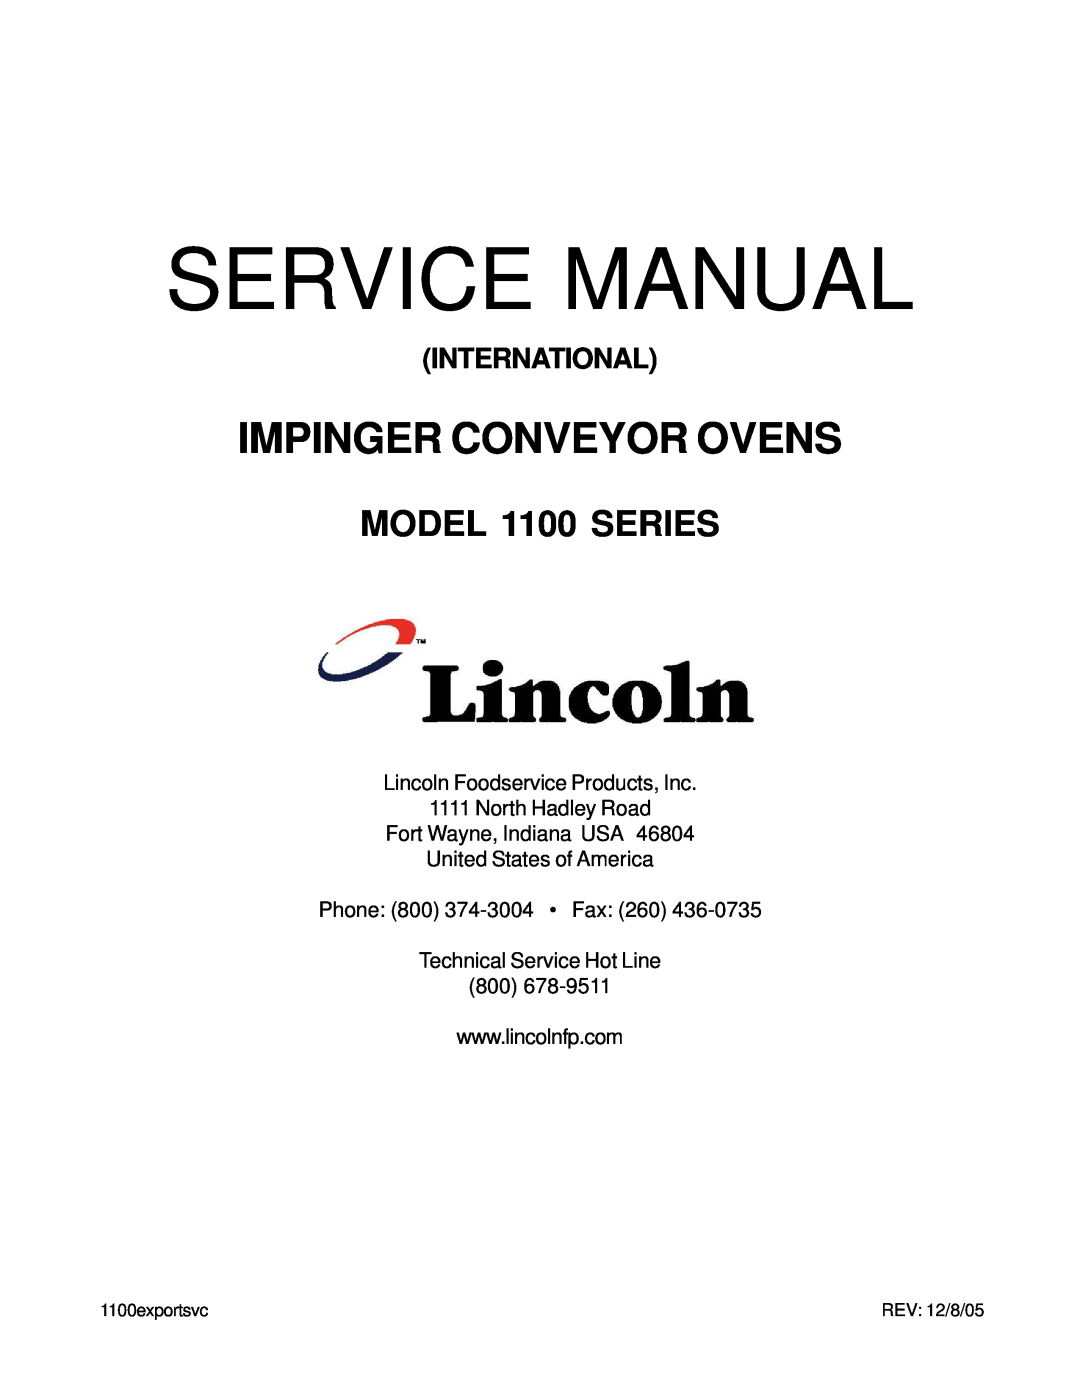 Lincoln 1100 Series service manual Service Manual, Impinger Conveyor Ovens, MODEL 1100 SERIES, International 